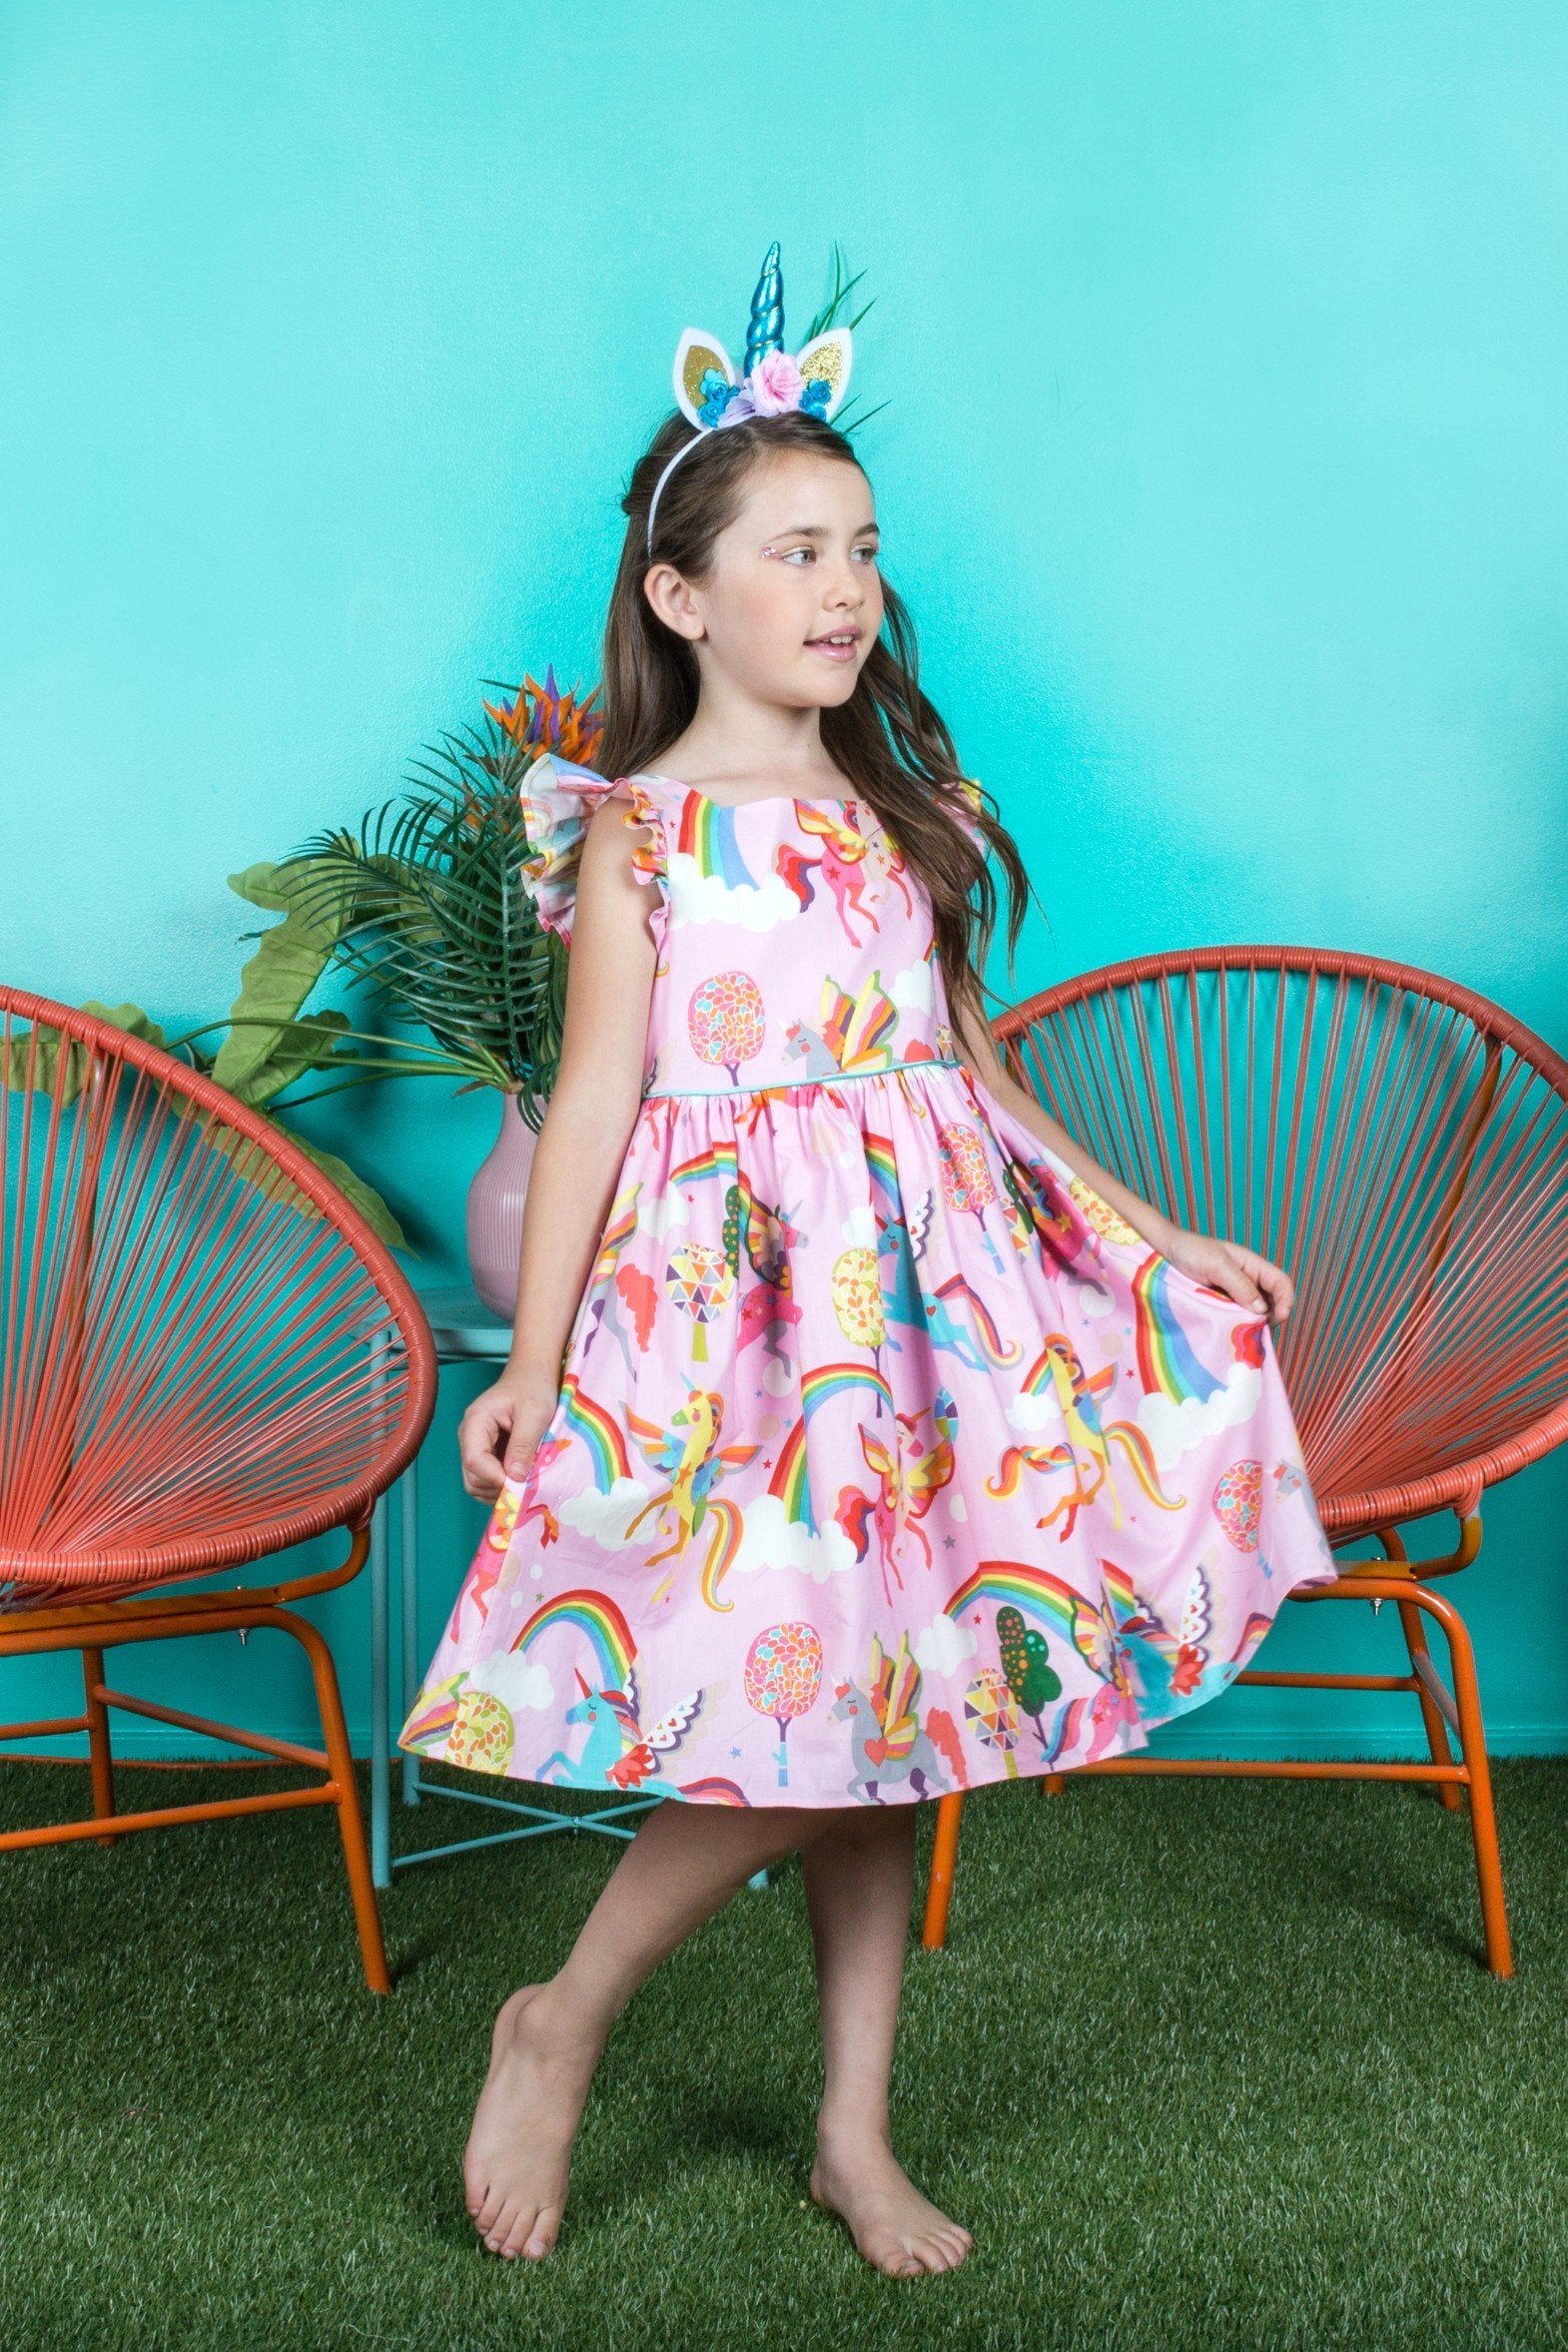 Buy Designer Birthday Dress For Girls | Fayon Kids